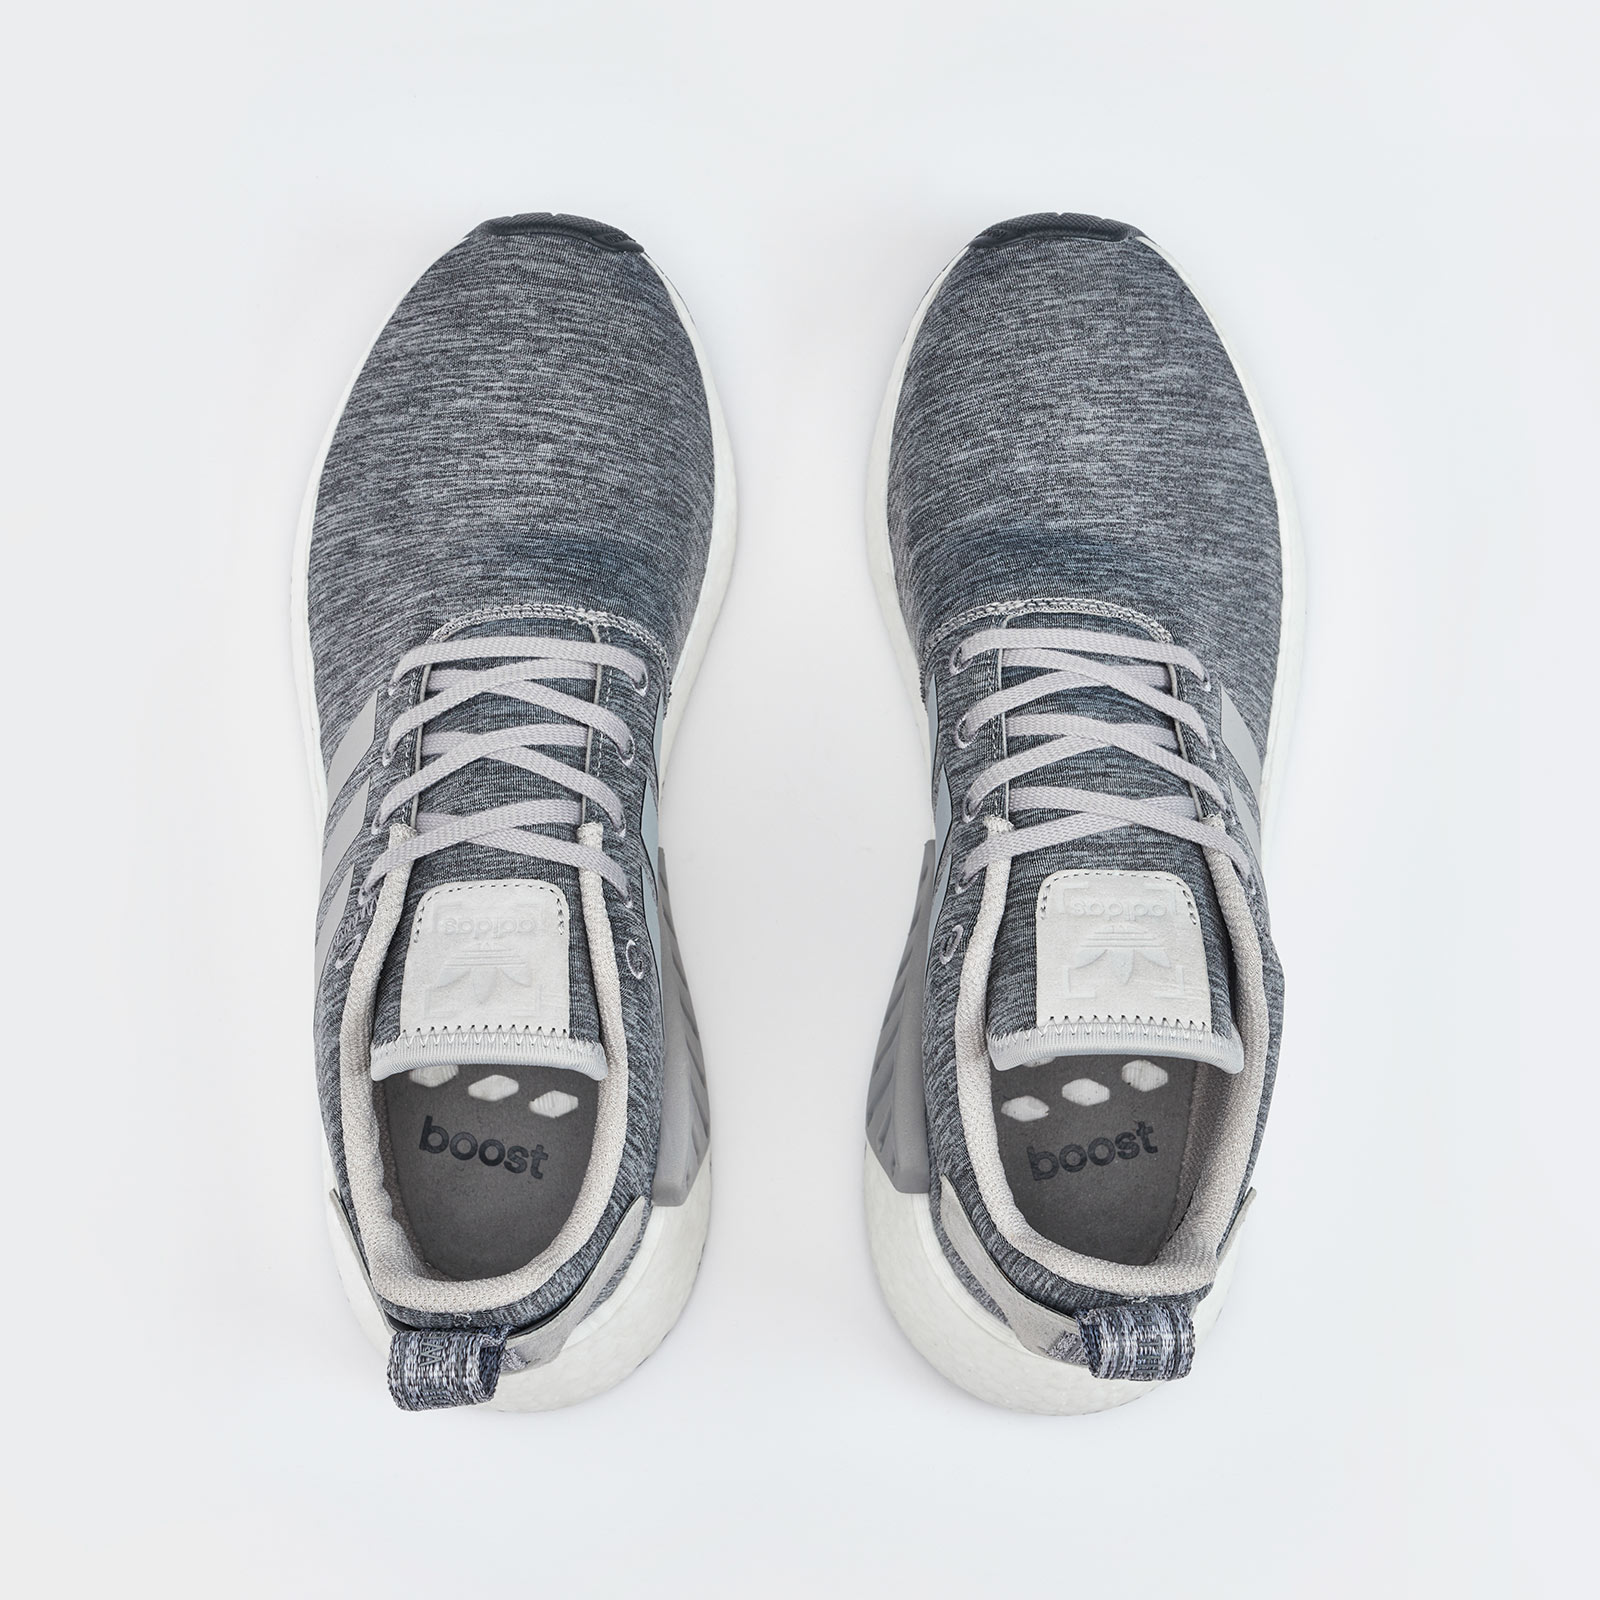 Adidas Originals NMD_R2
Medium Grey